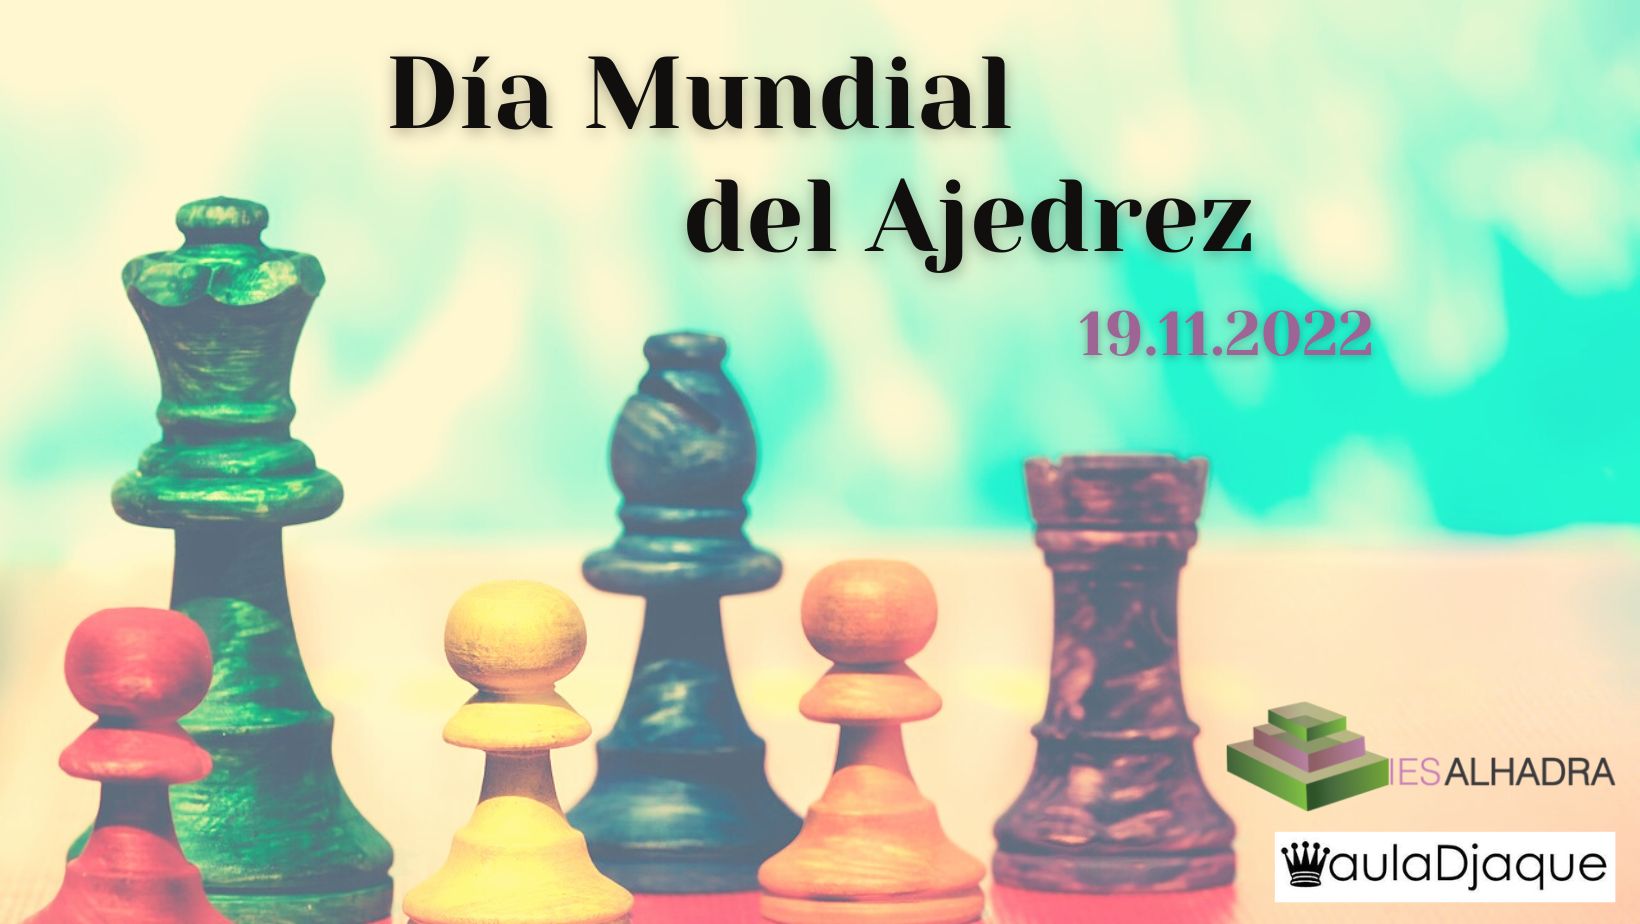 DIA MUNDIAL DEL AJEDREZ by PorEsto! - Issuu